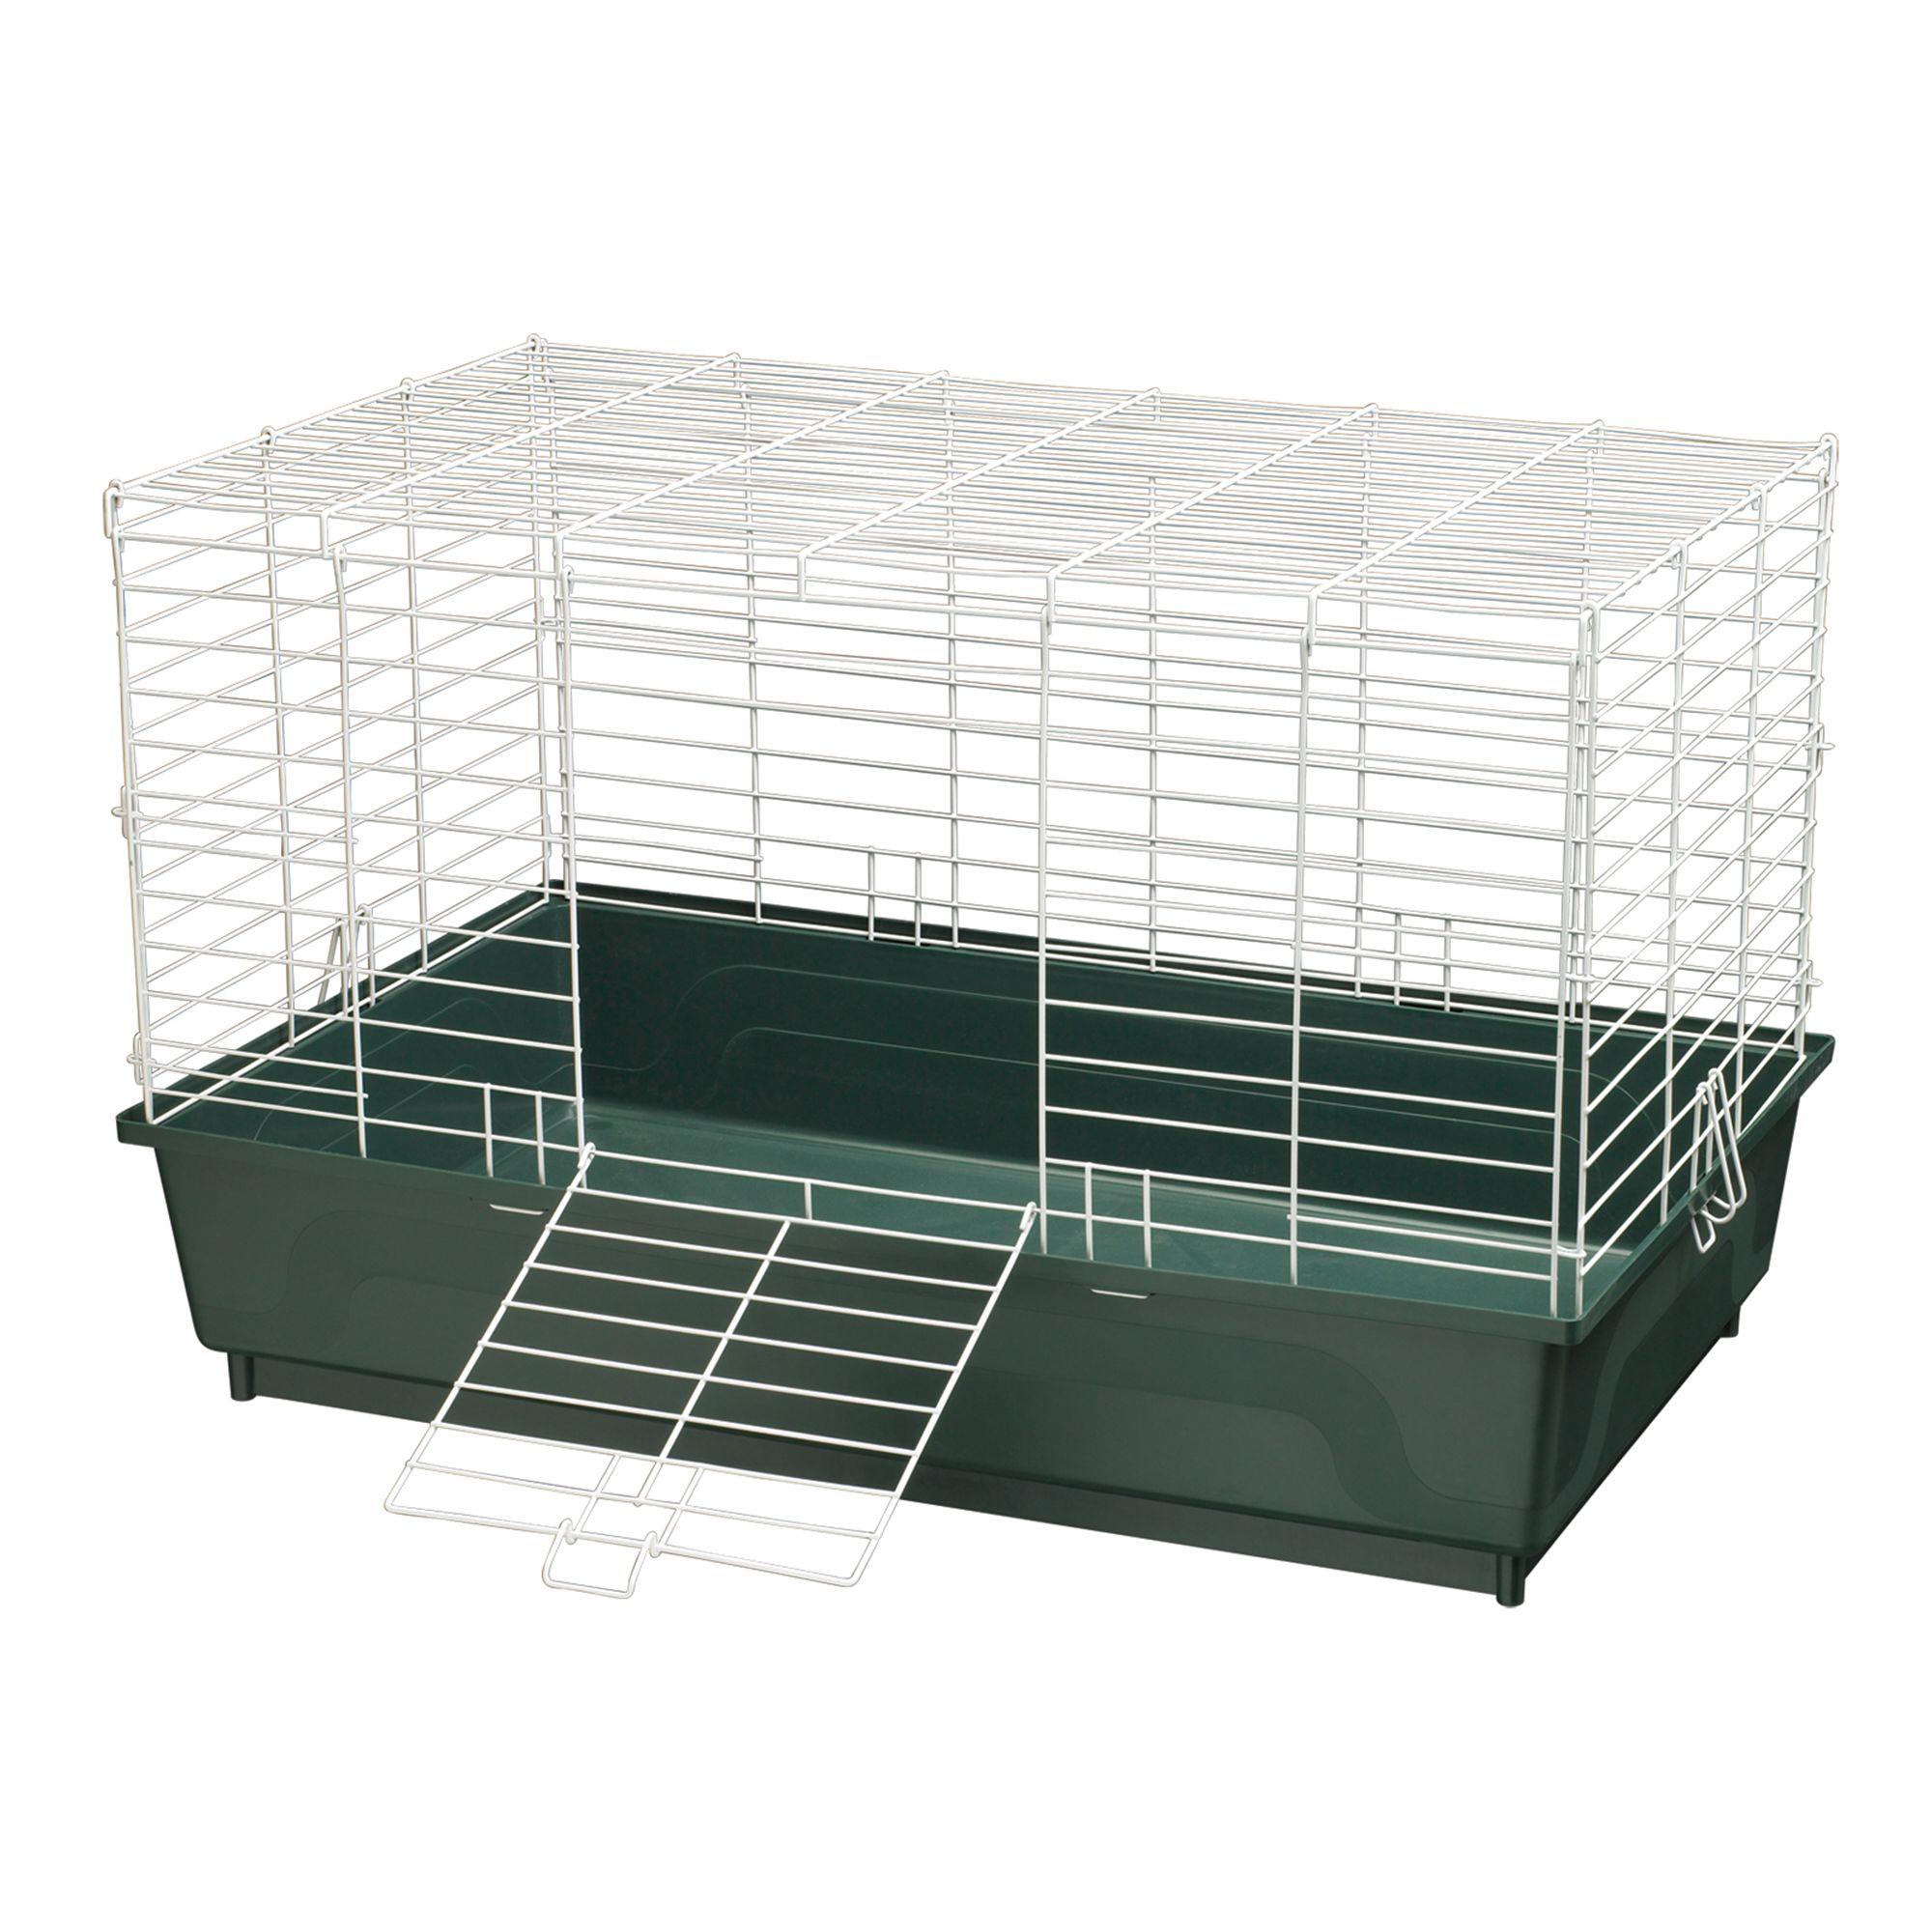 petsmart guinea pig cage